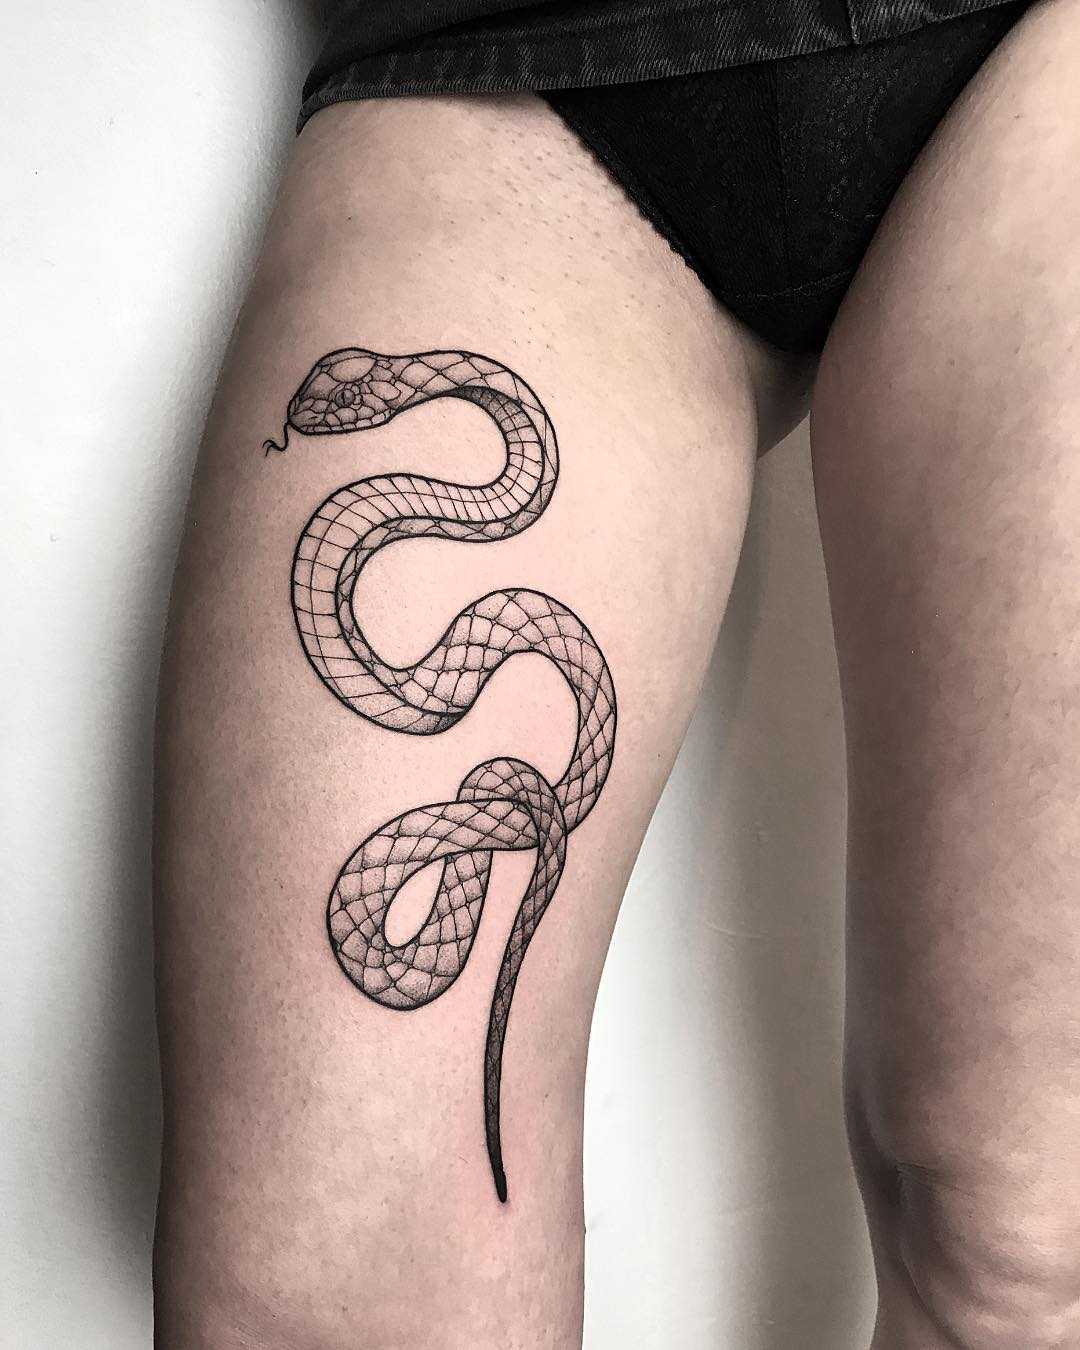 Snake by tattooist Spence @zz tattoo